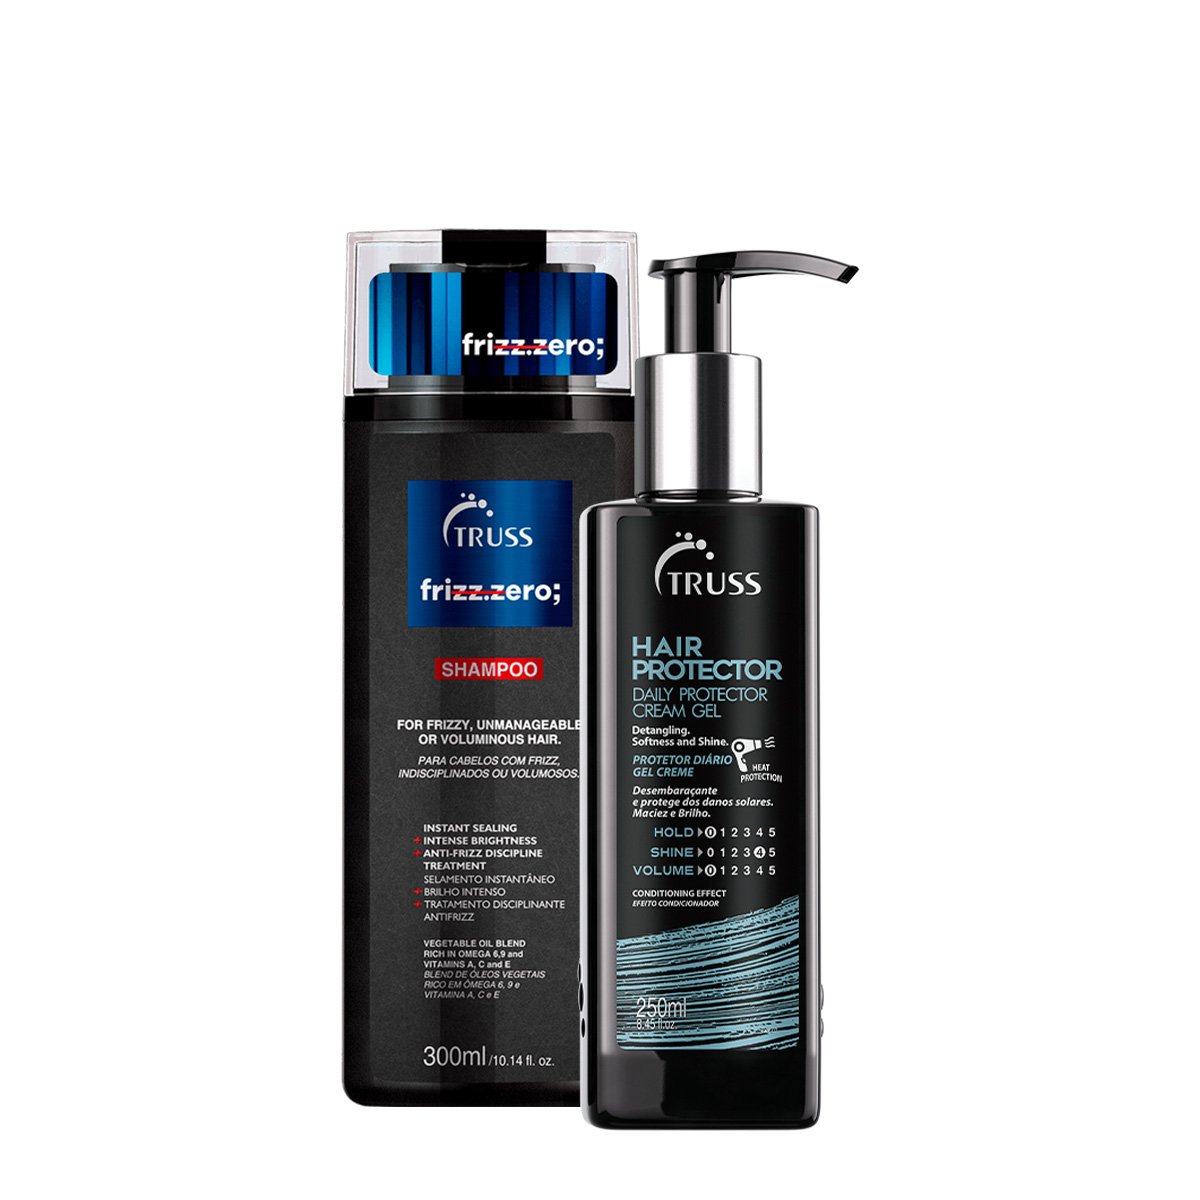 Kit Truss Frizz Zero Shampoo e Hair Protector (2 produtos) ÚNICO 1